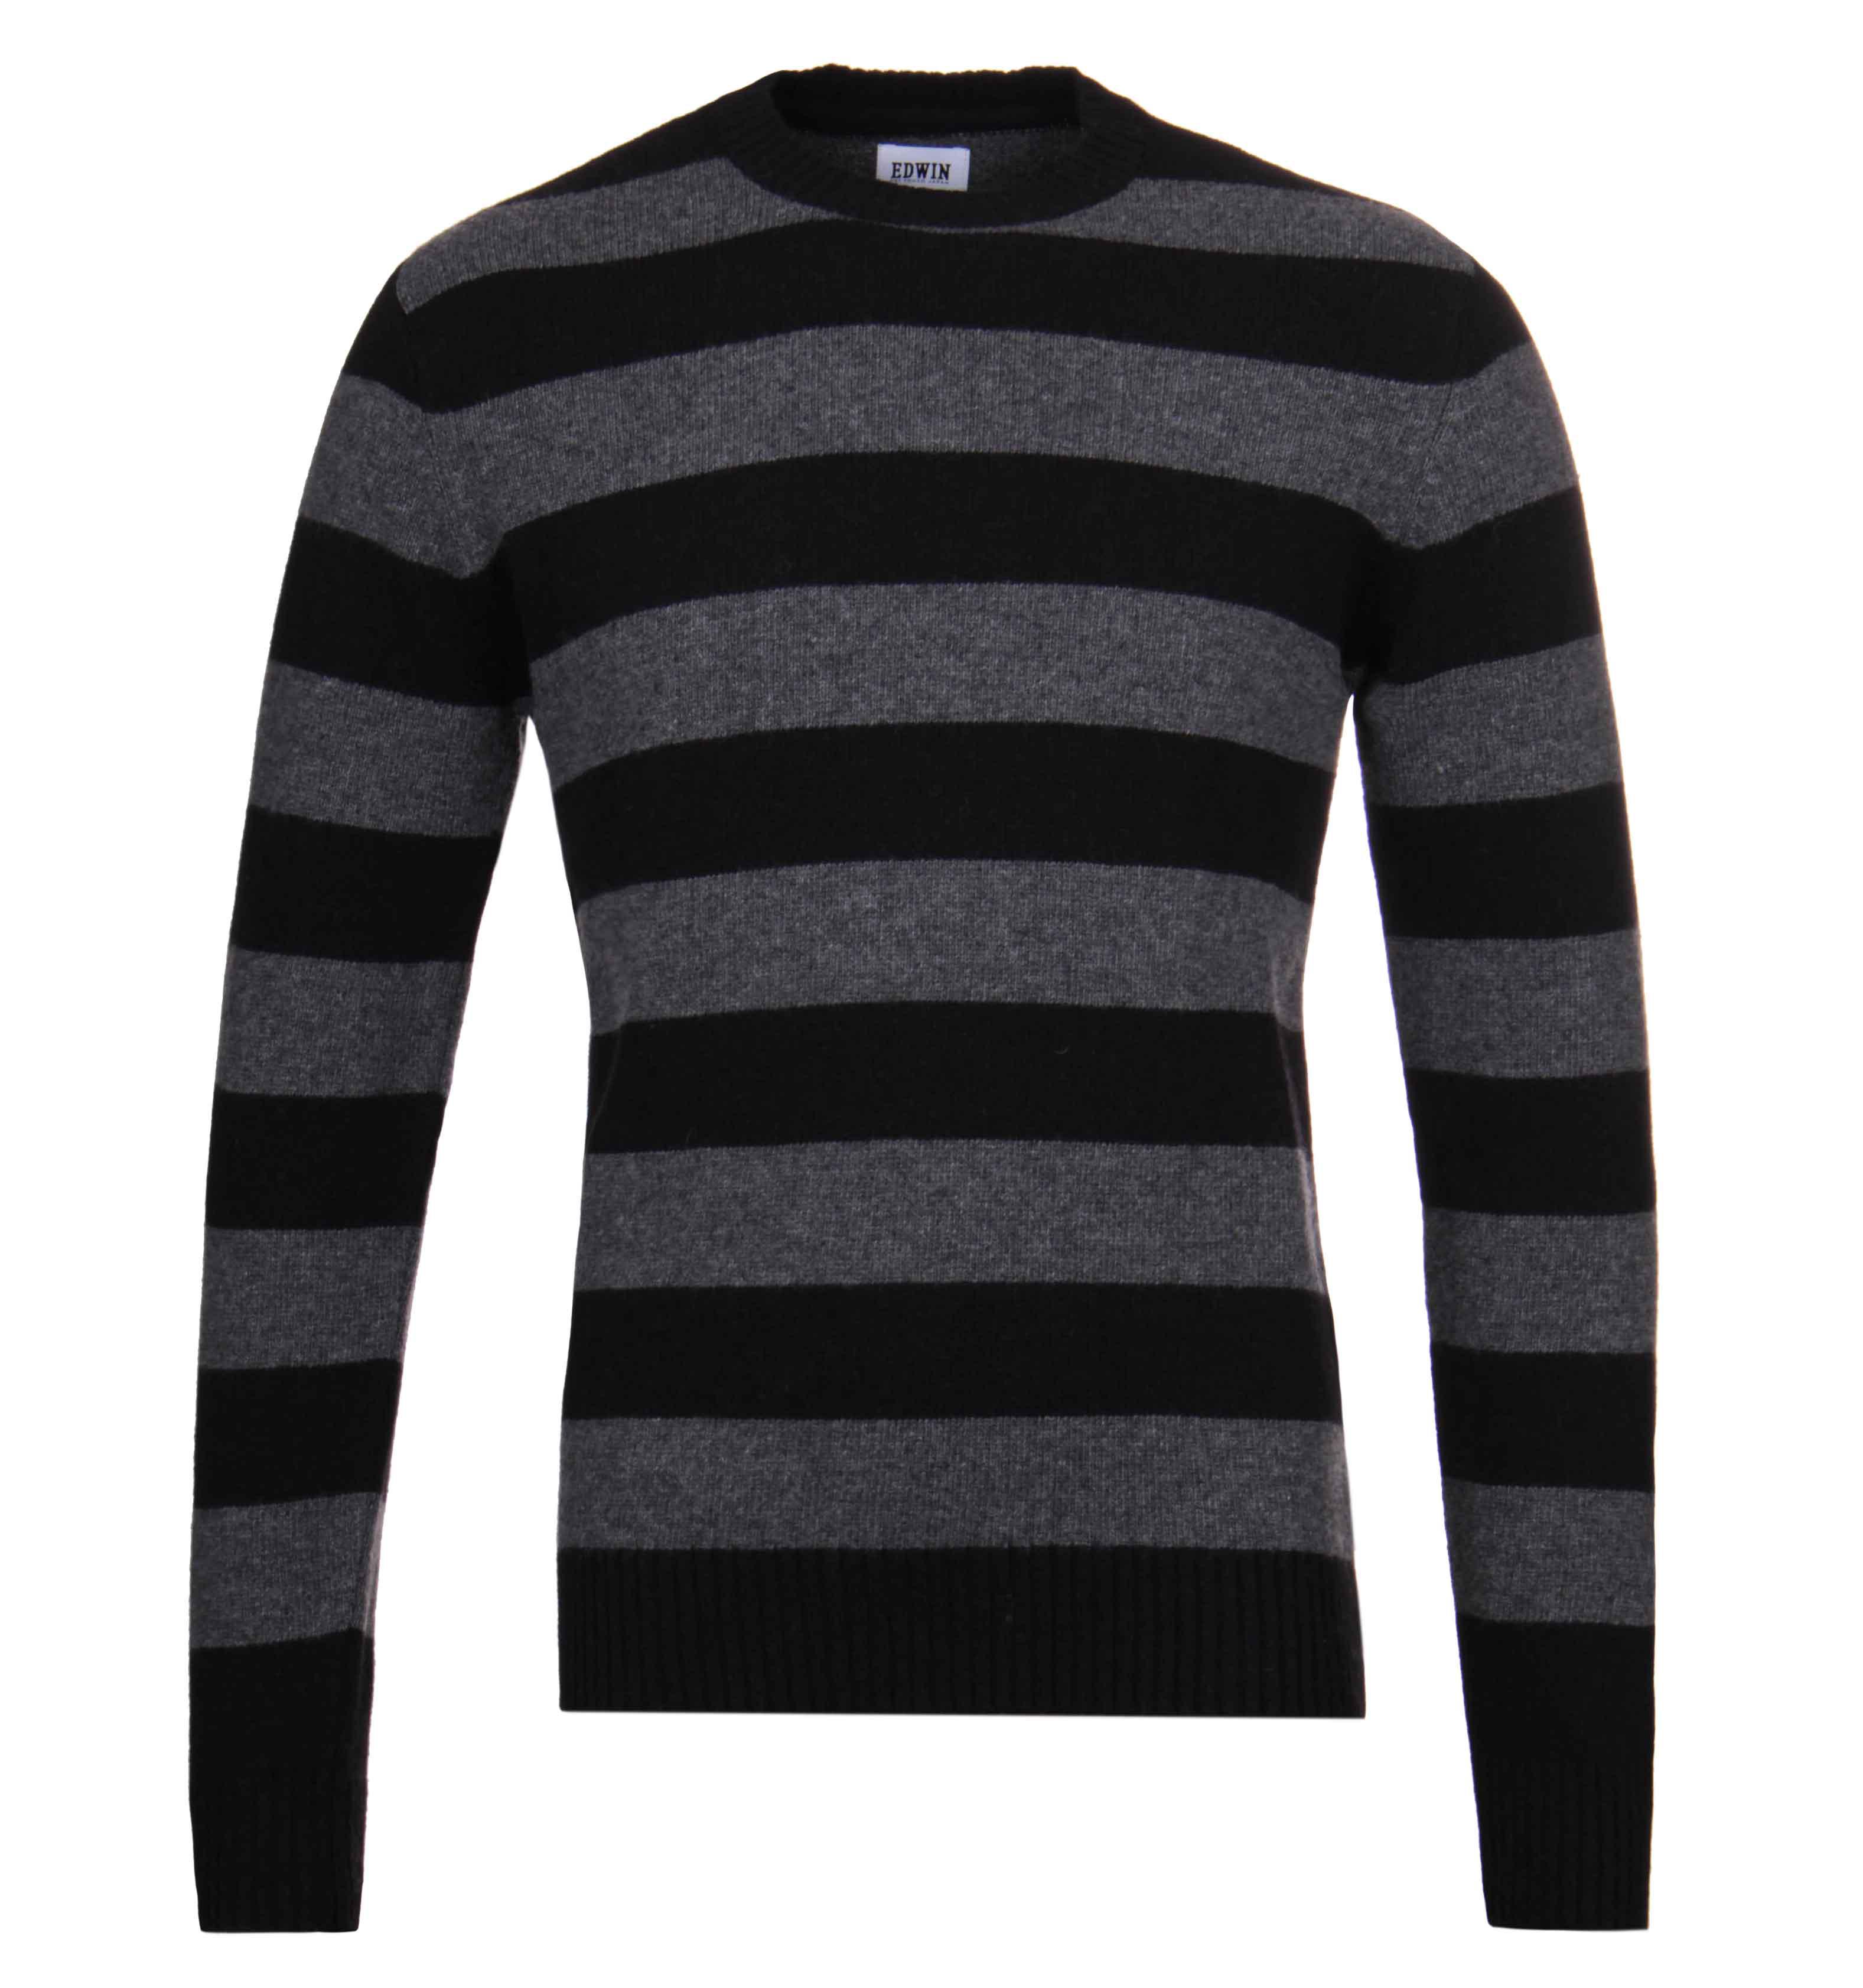 Lyst - Edwin Standard Bar Black & Charcoal Striped Crew Neck Sweater in ...